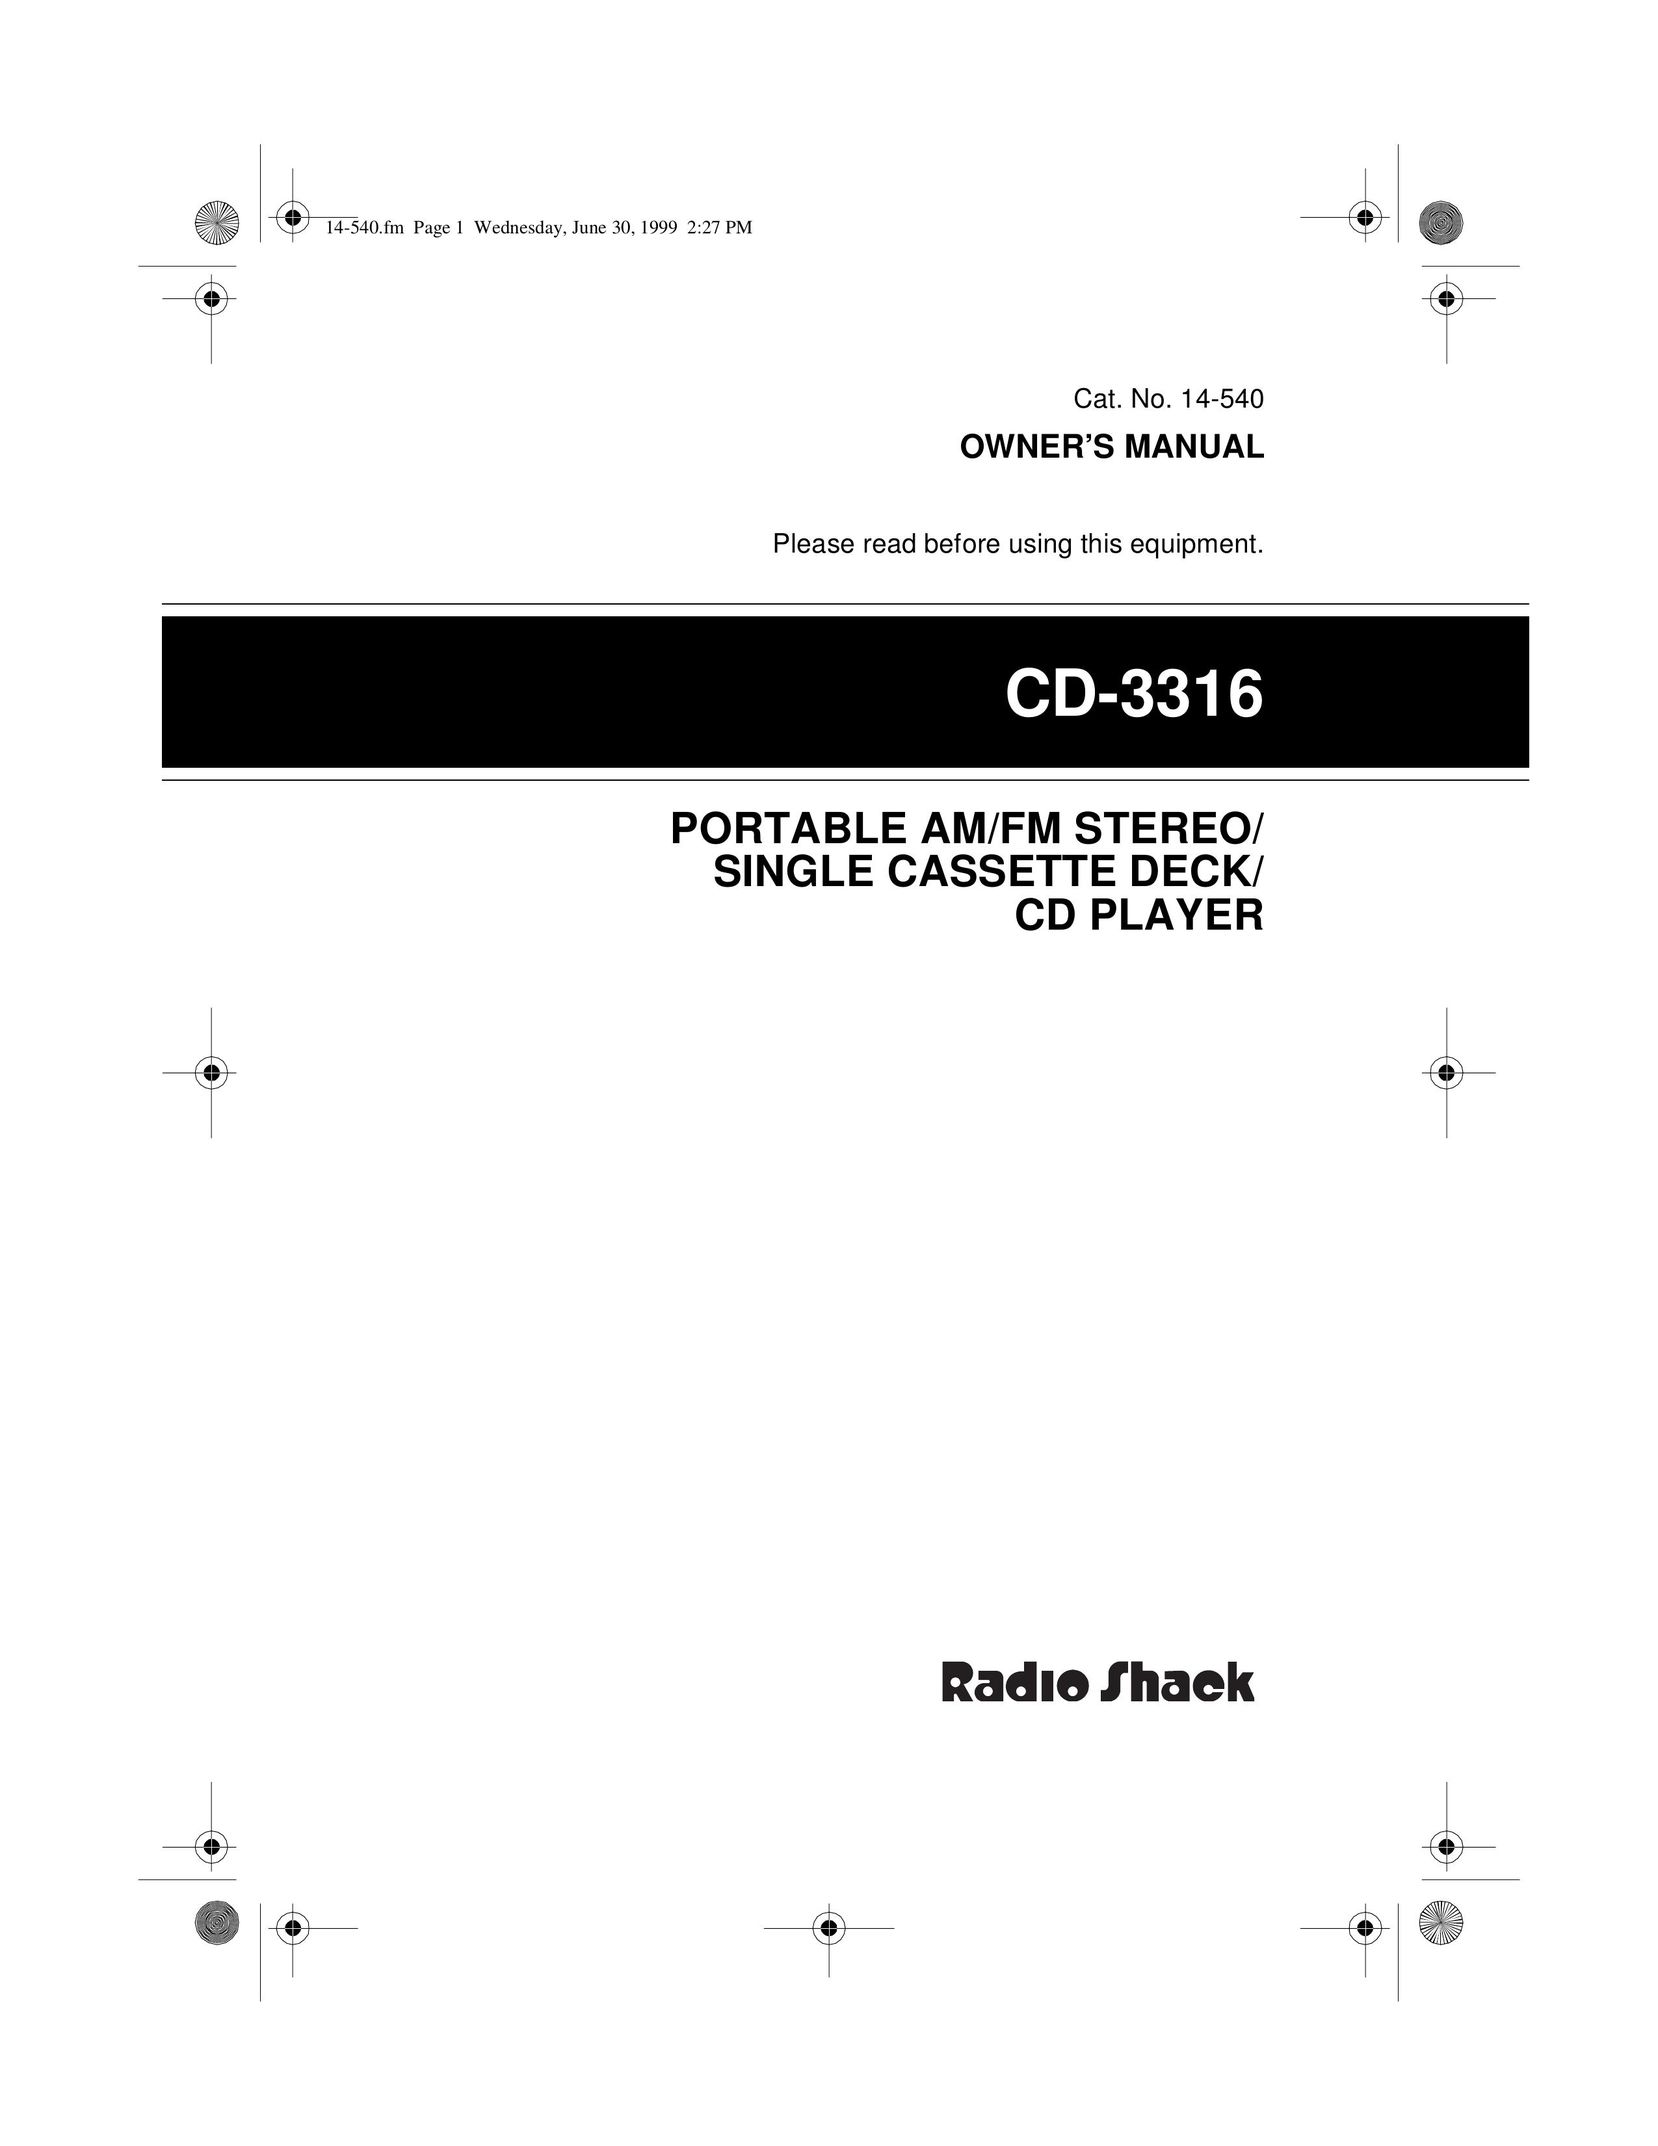 Radio Shack CD-3316 CD Player User Manual